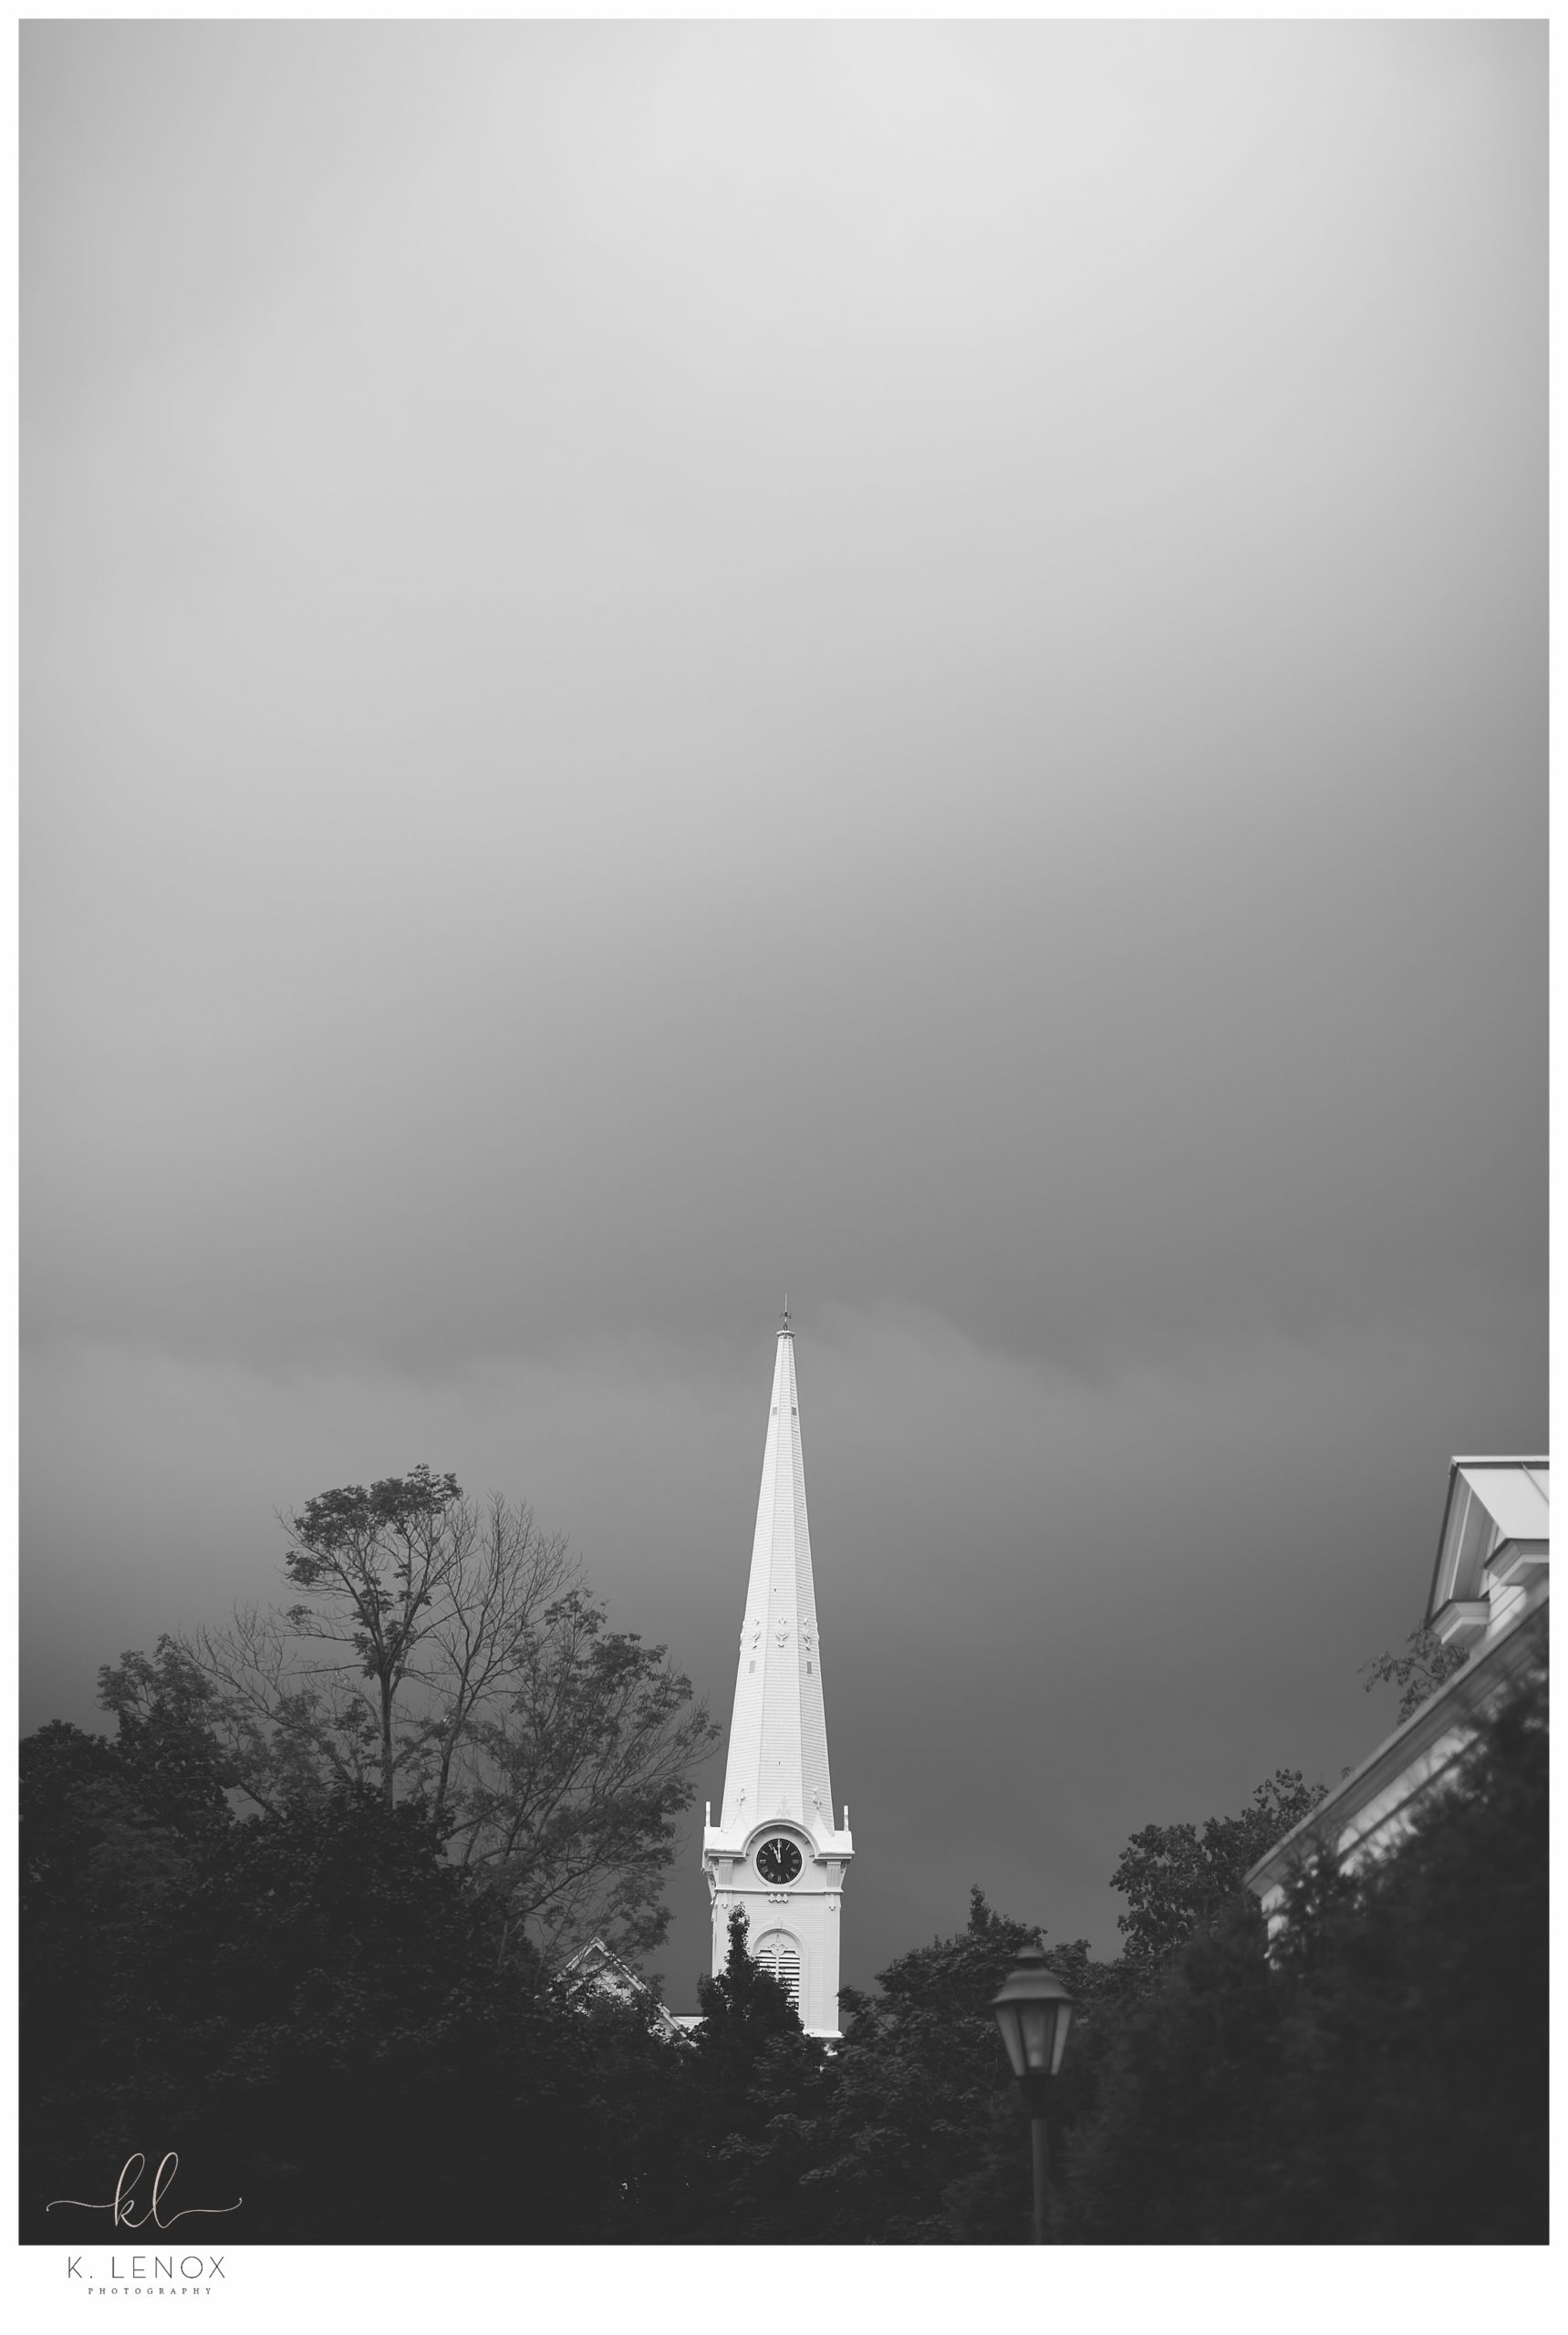 Manchester VT church steeple. Black and White photo. 